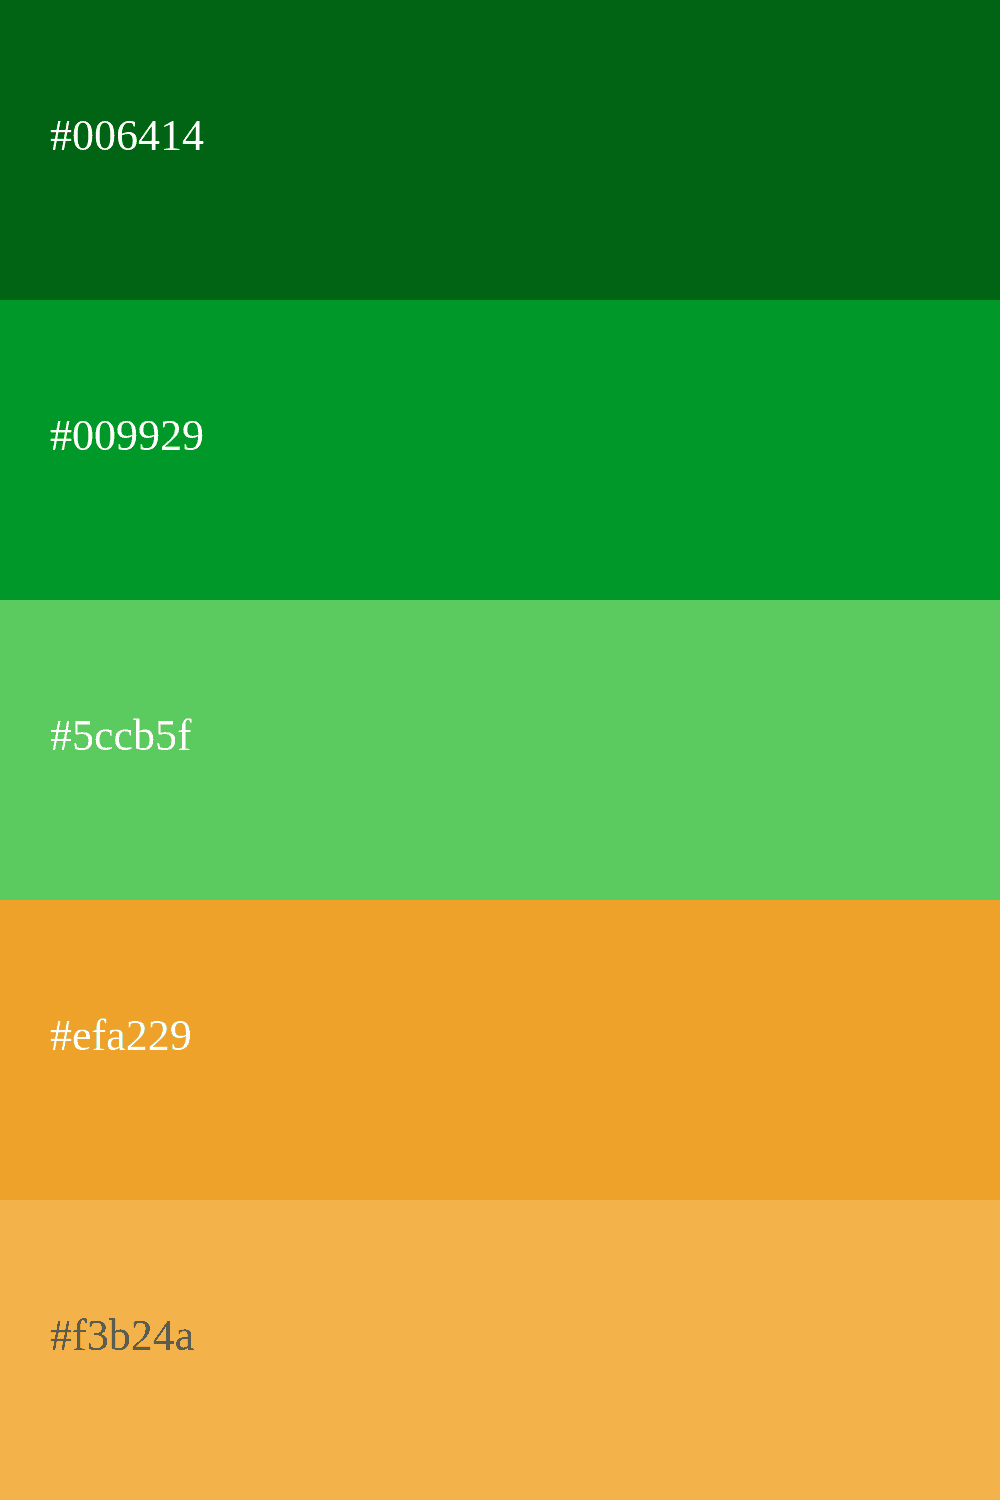 cor verde e laranja